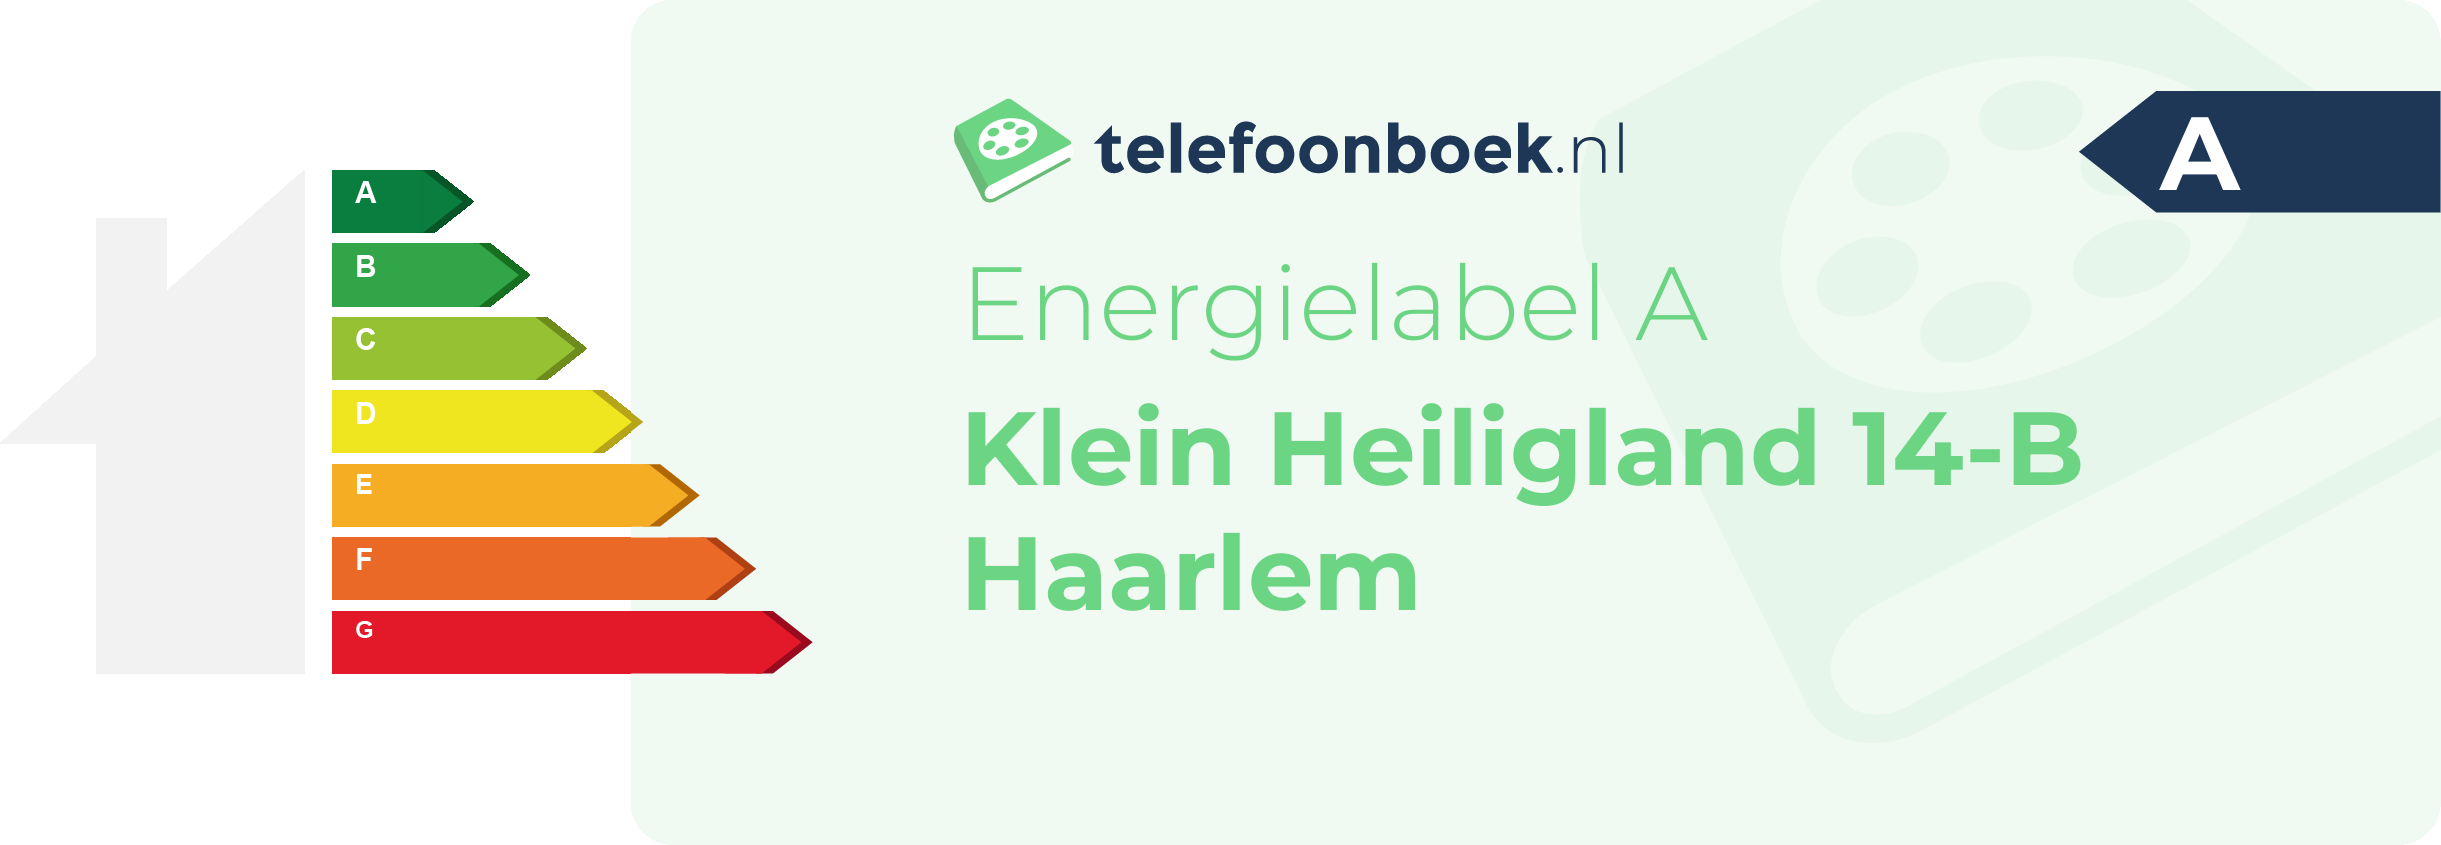 Energielabel Klein Heiligland 14-B Haarlem